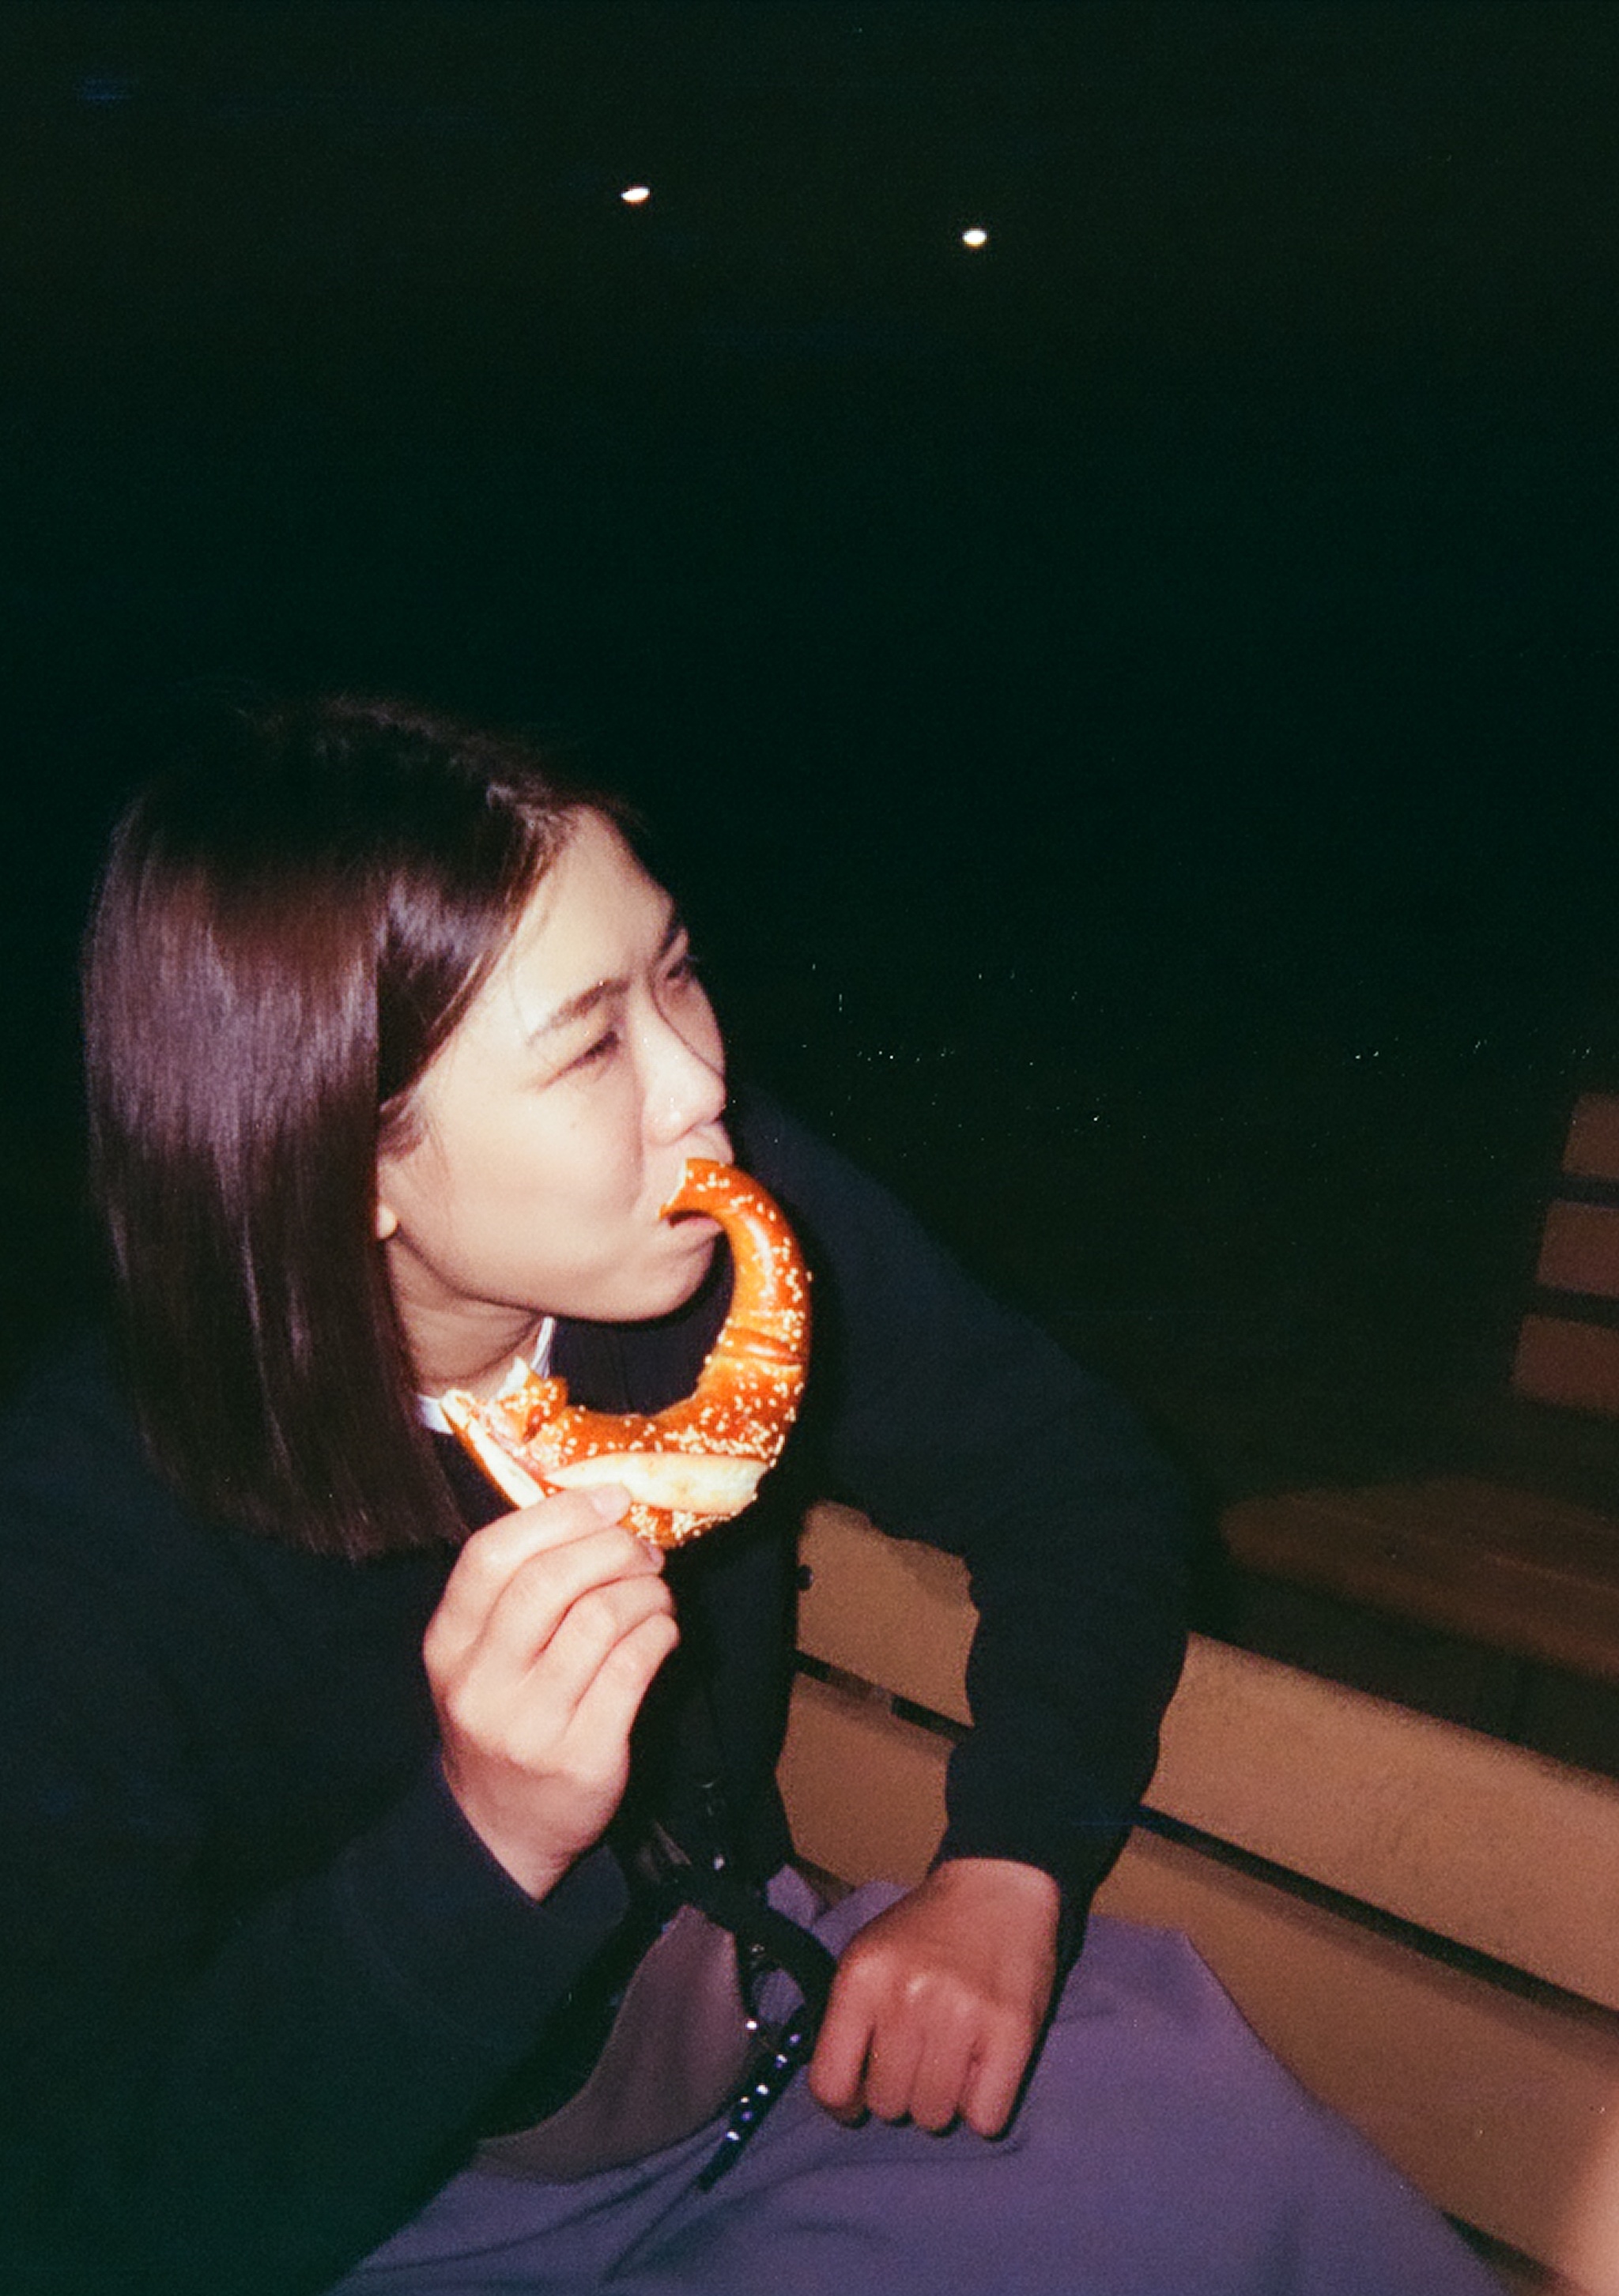 A short-haired woman eating a pretzel.